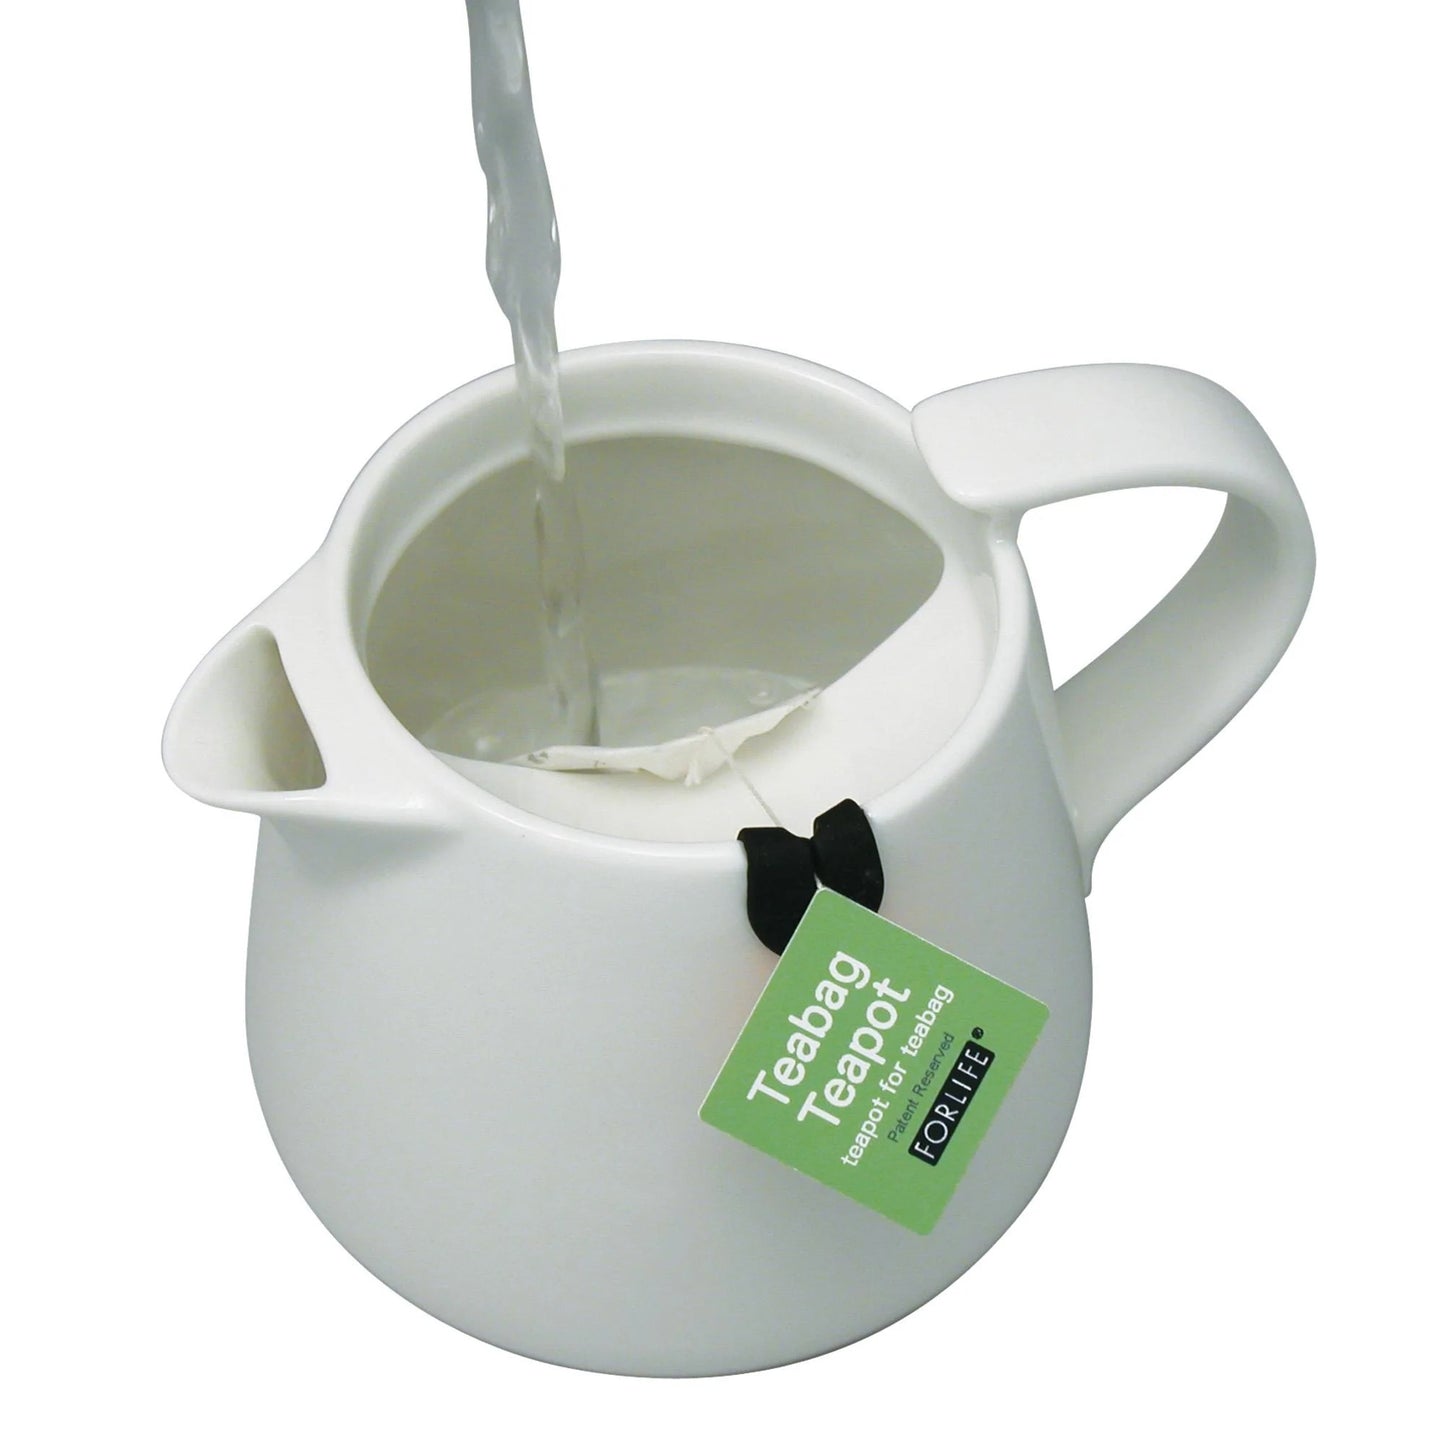 【FORLIFE】Tea Pot / 【FORLIFE】ティー・ポット